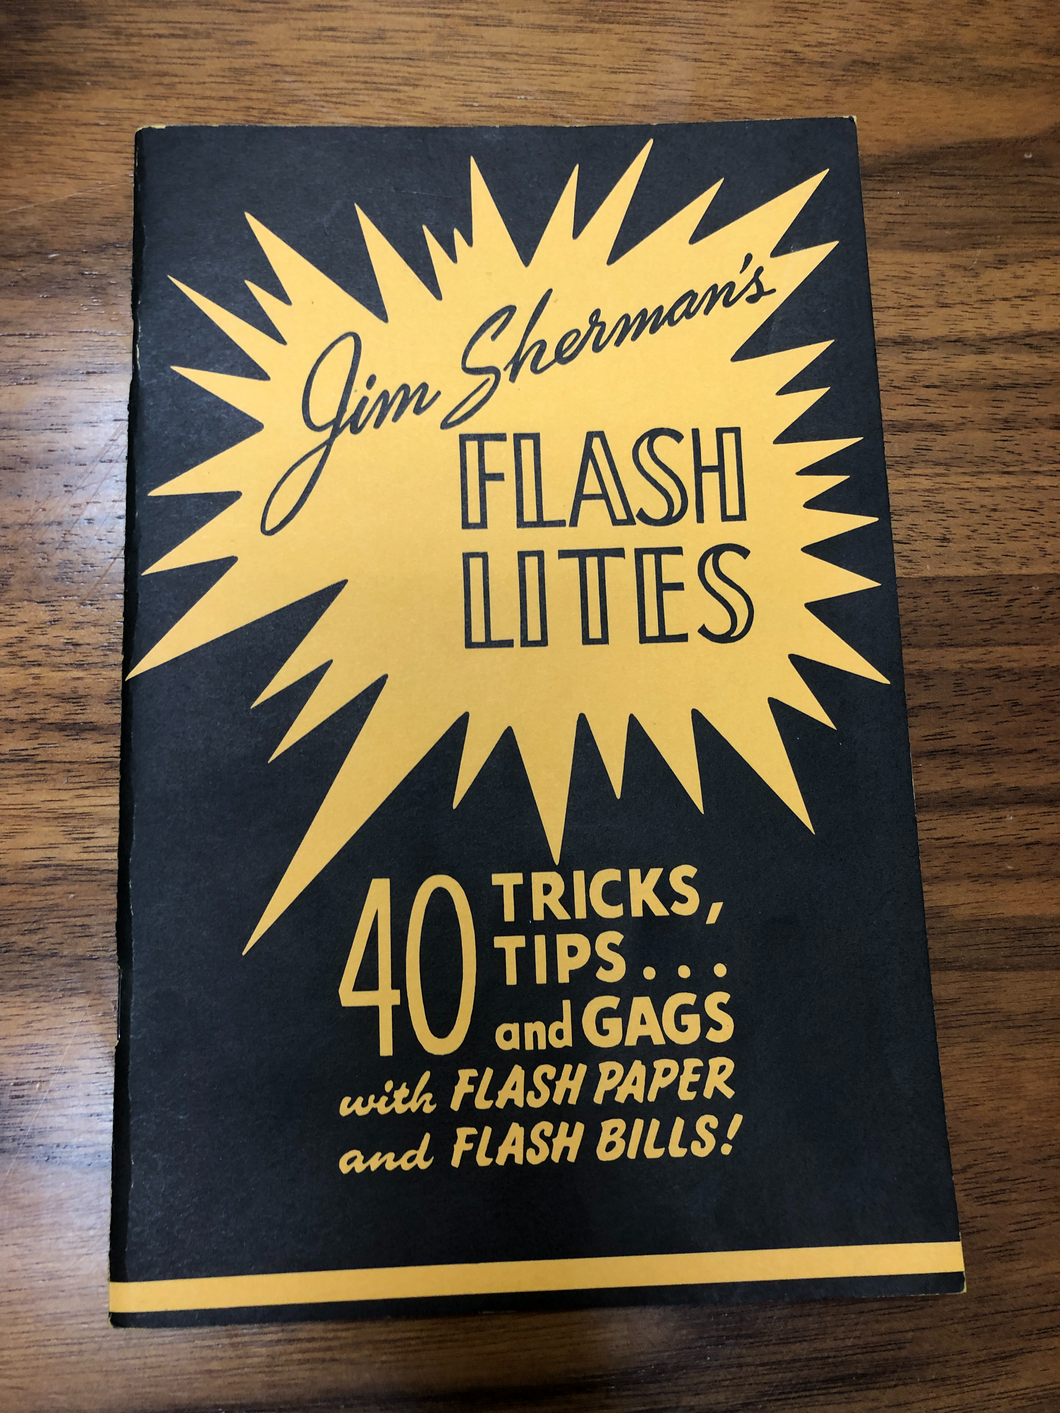 Jim Sherman's Flash Lites: 40 Tricks Tips and Gags